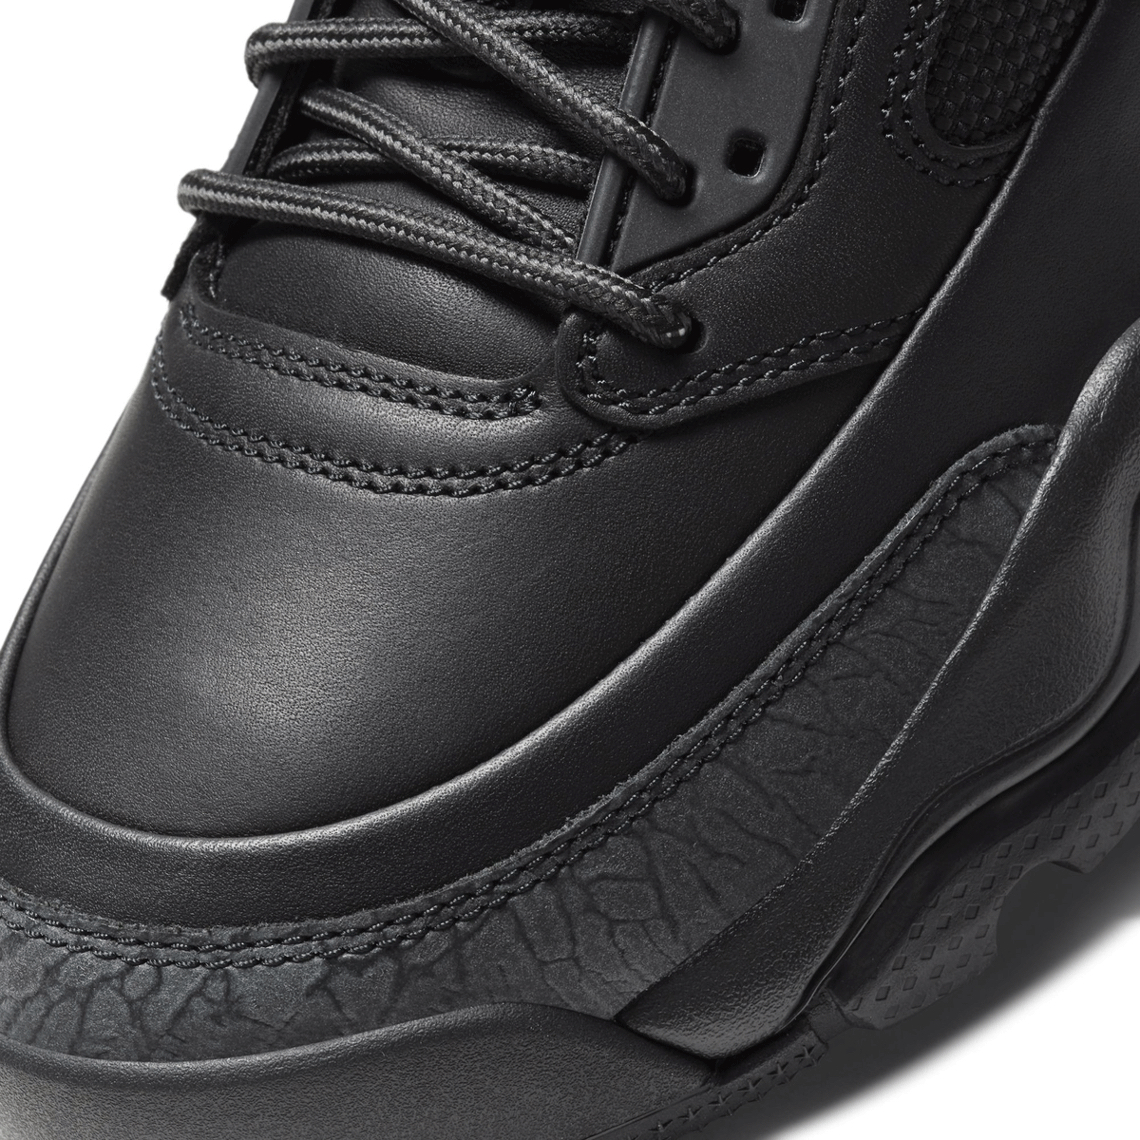 Jordan Spiz'ike 270 Boot Black CT1014-001 Release Date | SneakerNews.com